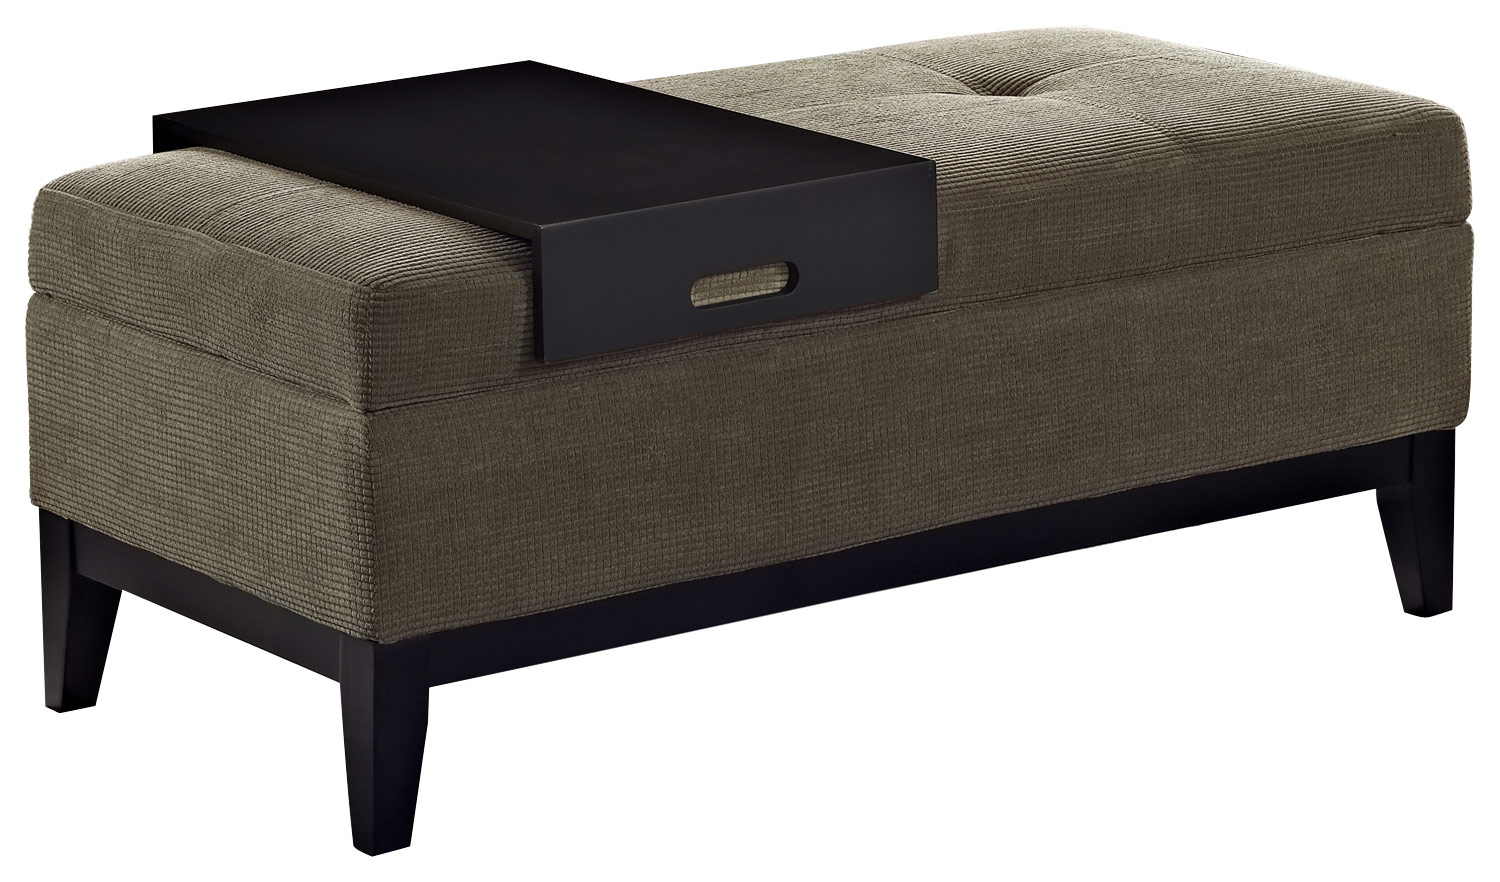 Simpli Home - Oregon Rectangular Fabric Bench Ottoman With Inner Storage - Khaki Beige was $305.99 now $214.99 (30.0% off)